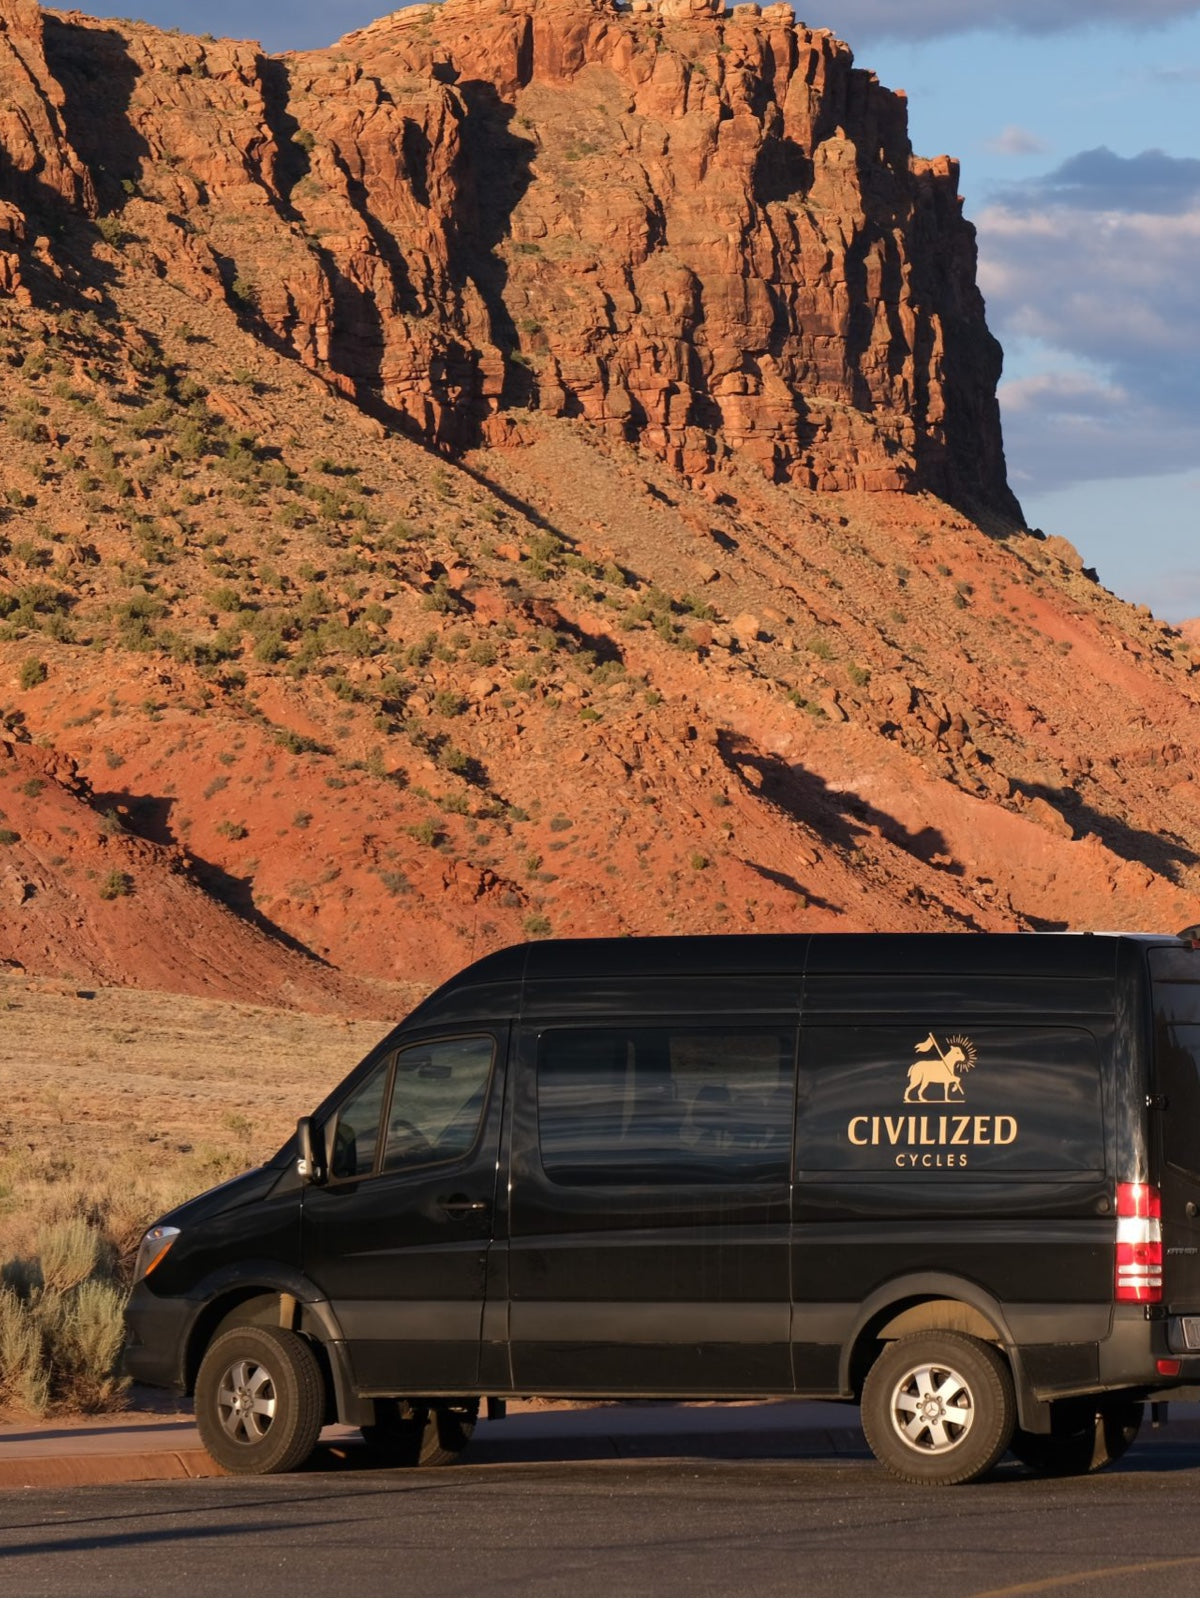 A Civ branded black van parked in the southwestern desert.